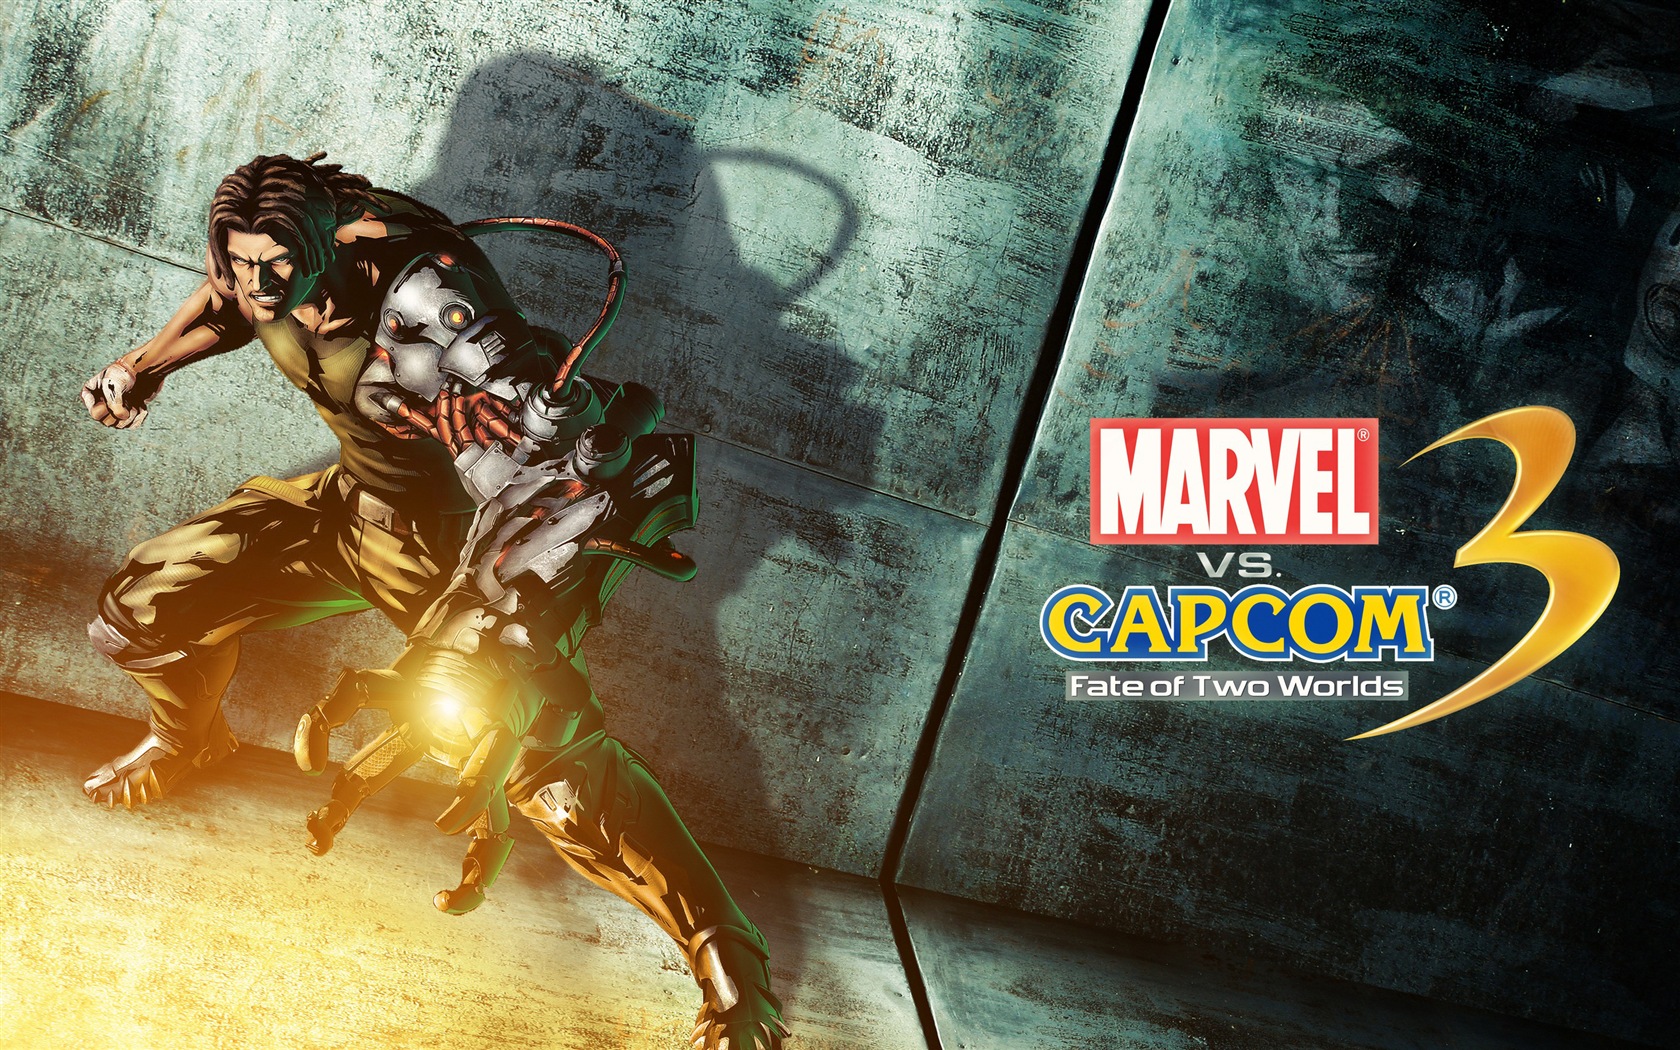 Marvel VS. Capcom 3: Fate of Two Worlds 漫畫英雄VS.卡普空3 高清遊戲壁紙 #8 - 1680x1050